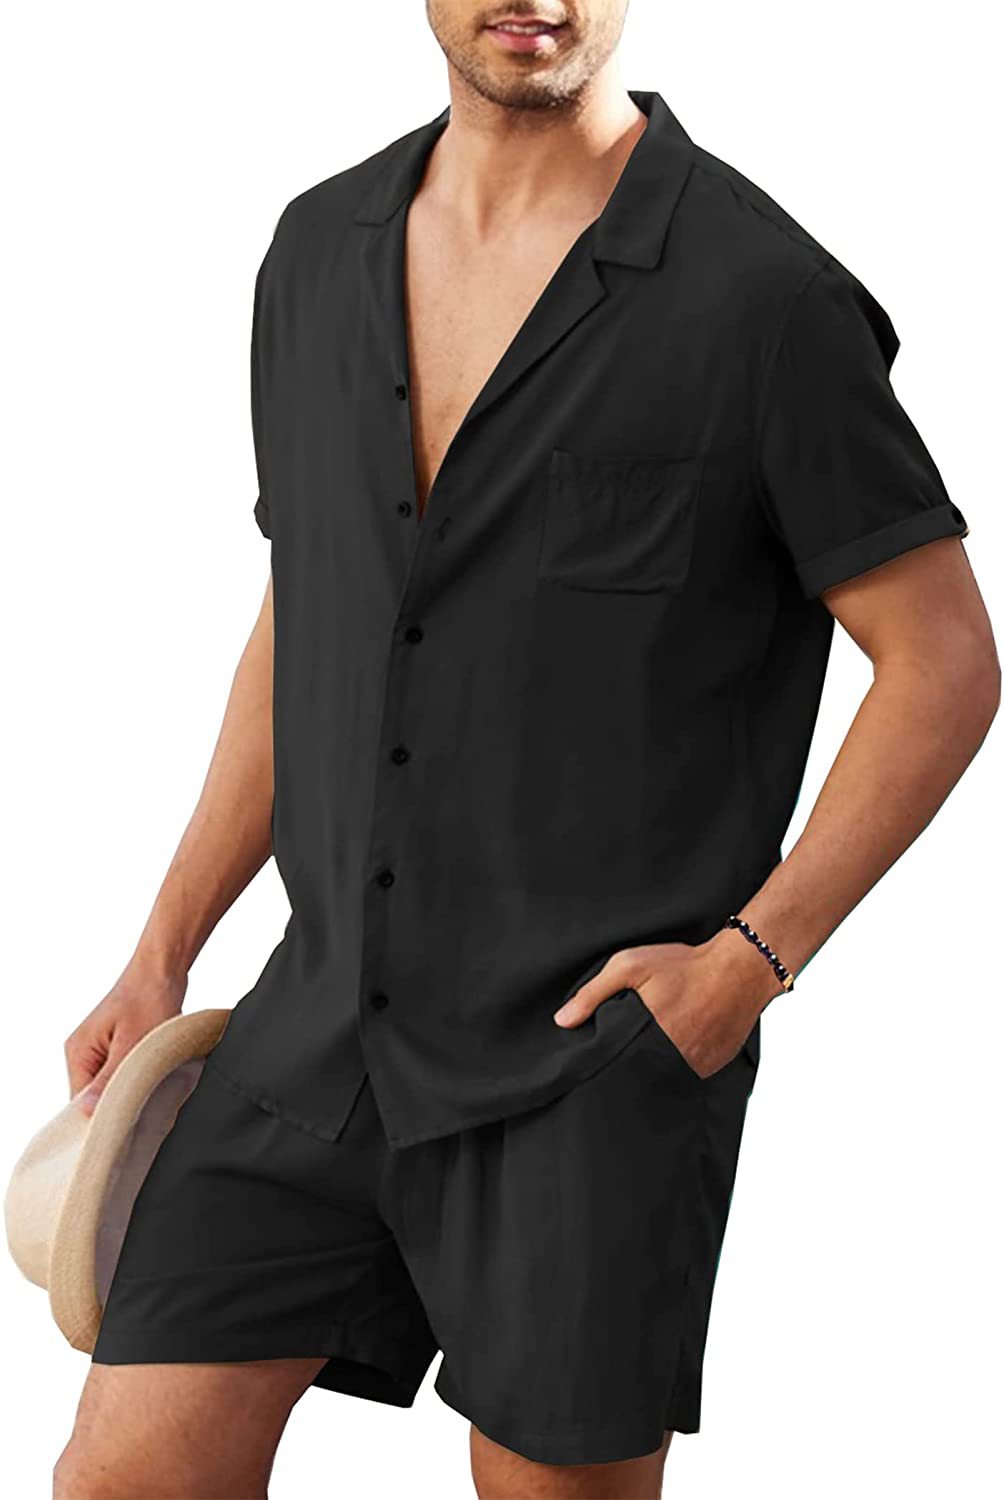 Casual Summer Men's Short Sleeves T Shirts and Shorts-Suits-Black-M-Free Shipping at meselling99